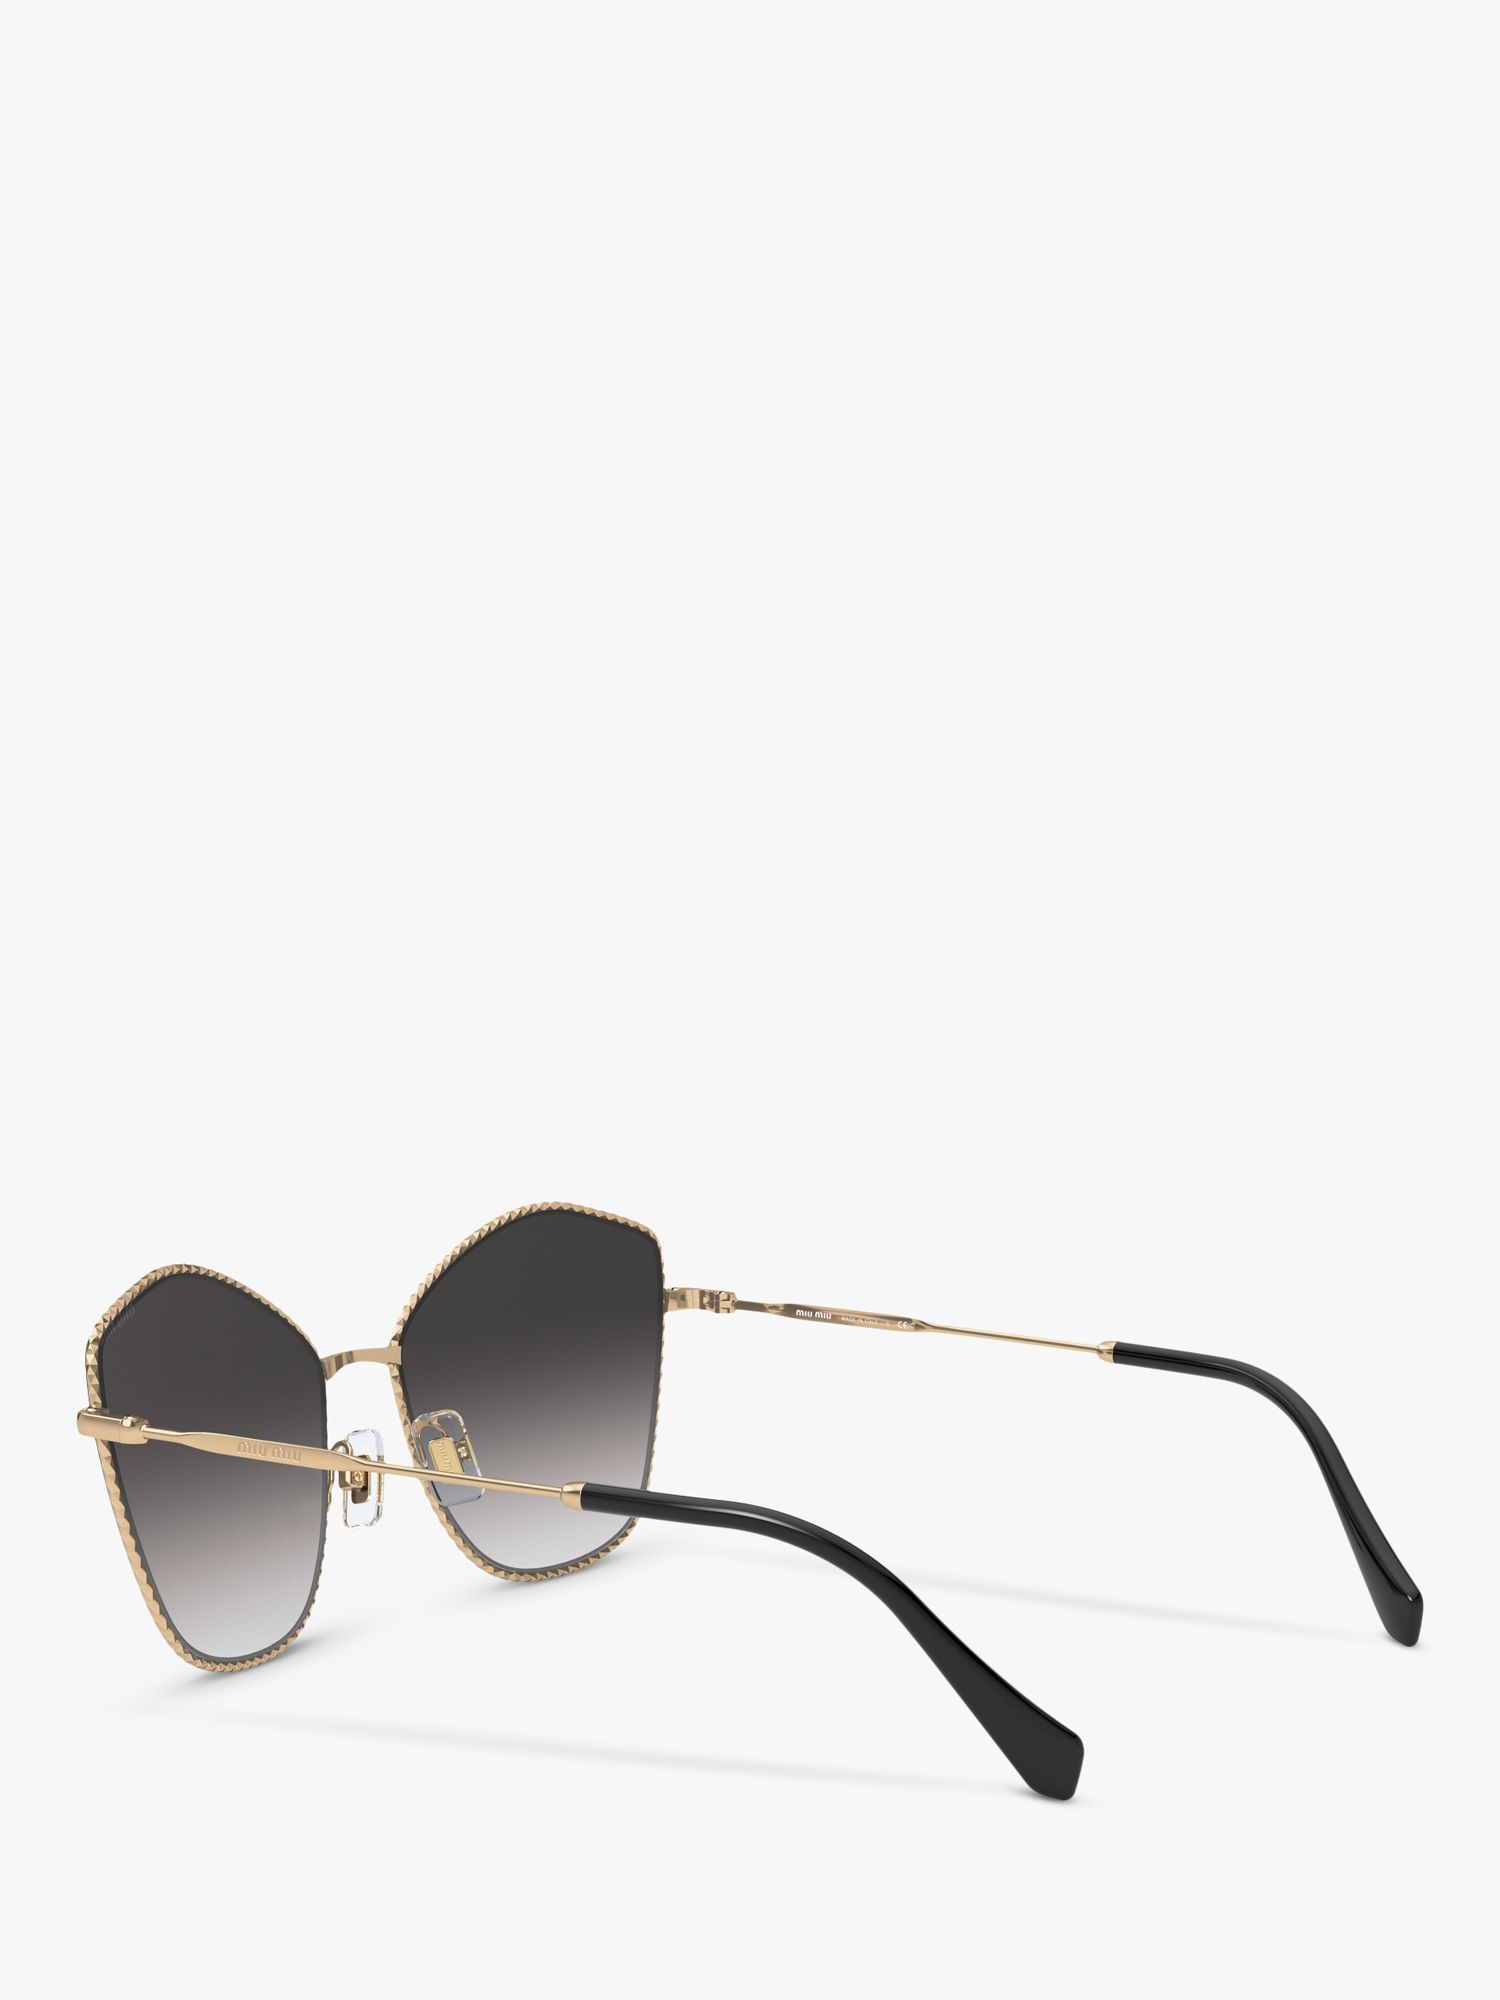 Buy Miu Miu MU 60VS Women's Cat's Eye Sunglasses, Antique Gold/Black Gradient Online at johnlewis.com